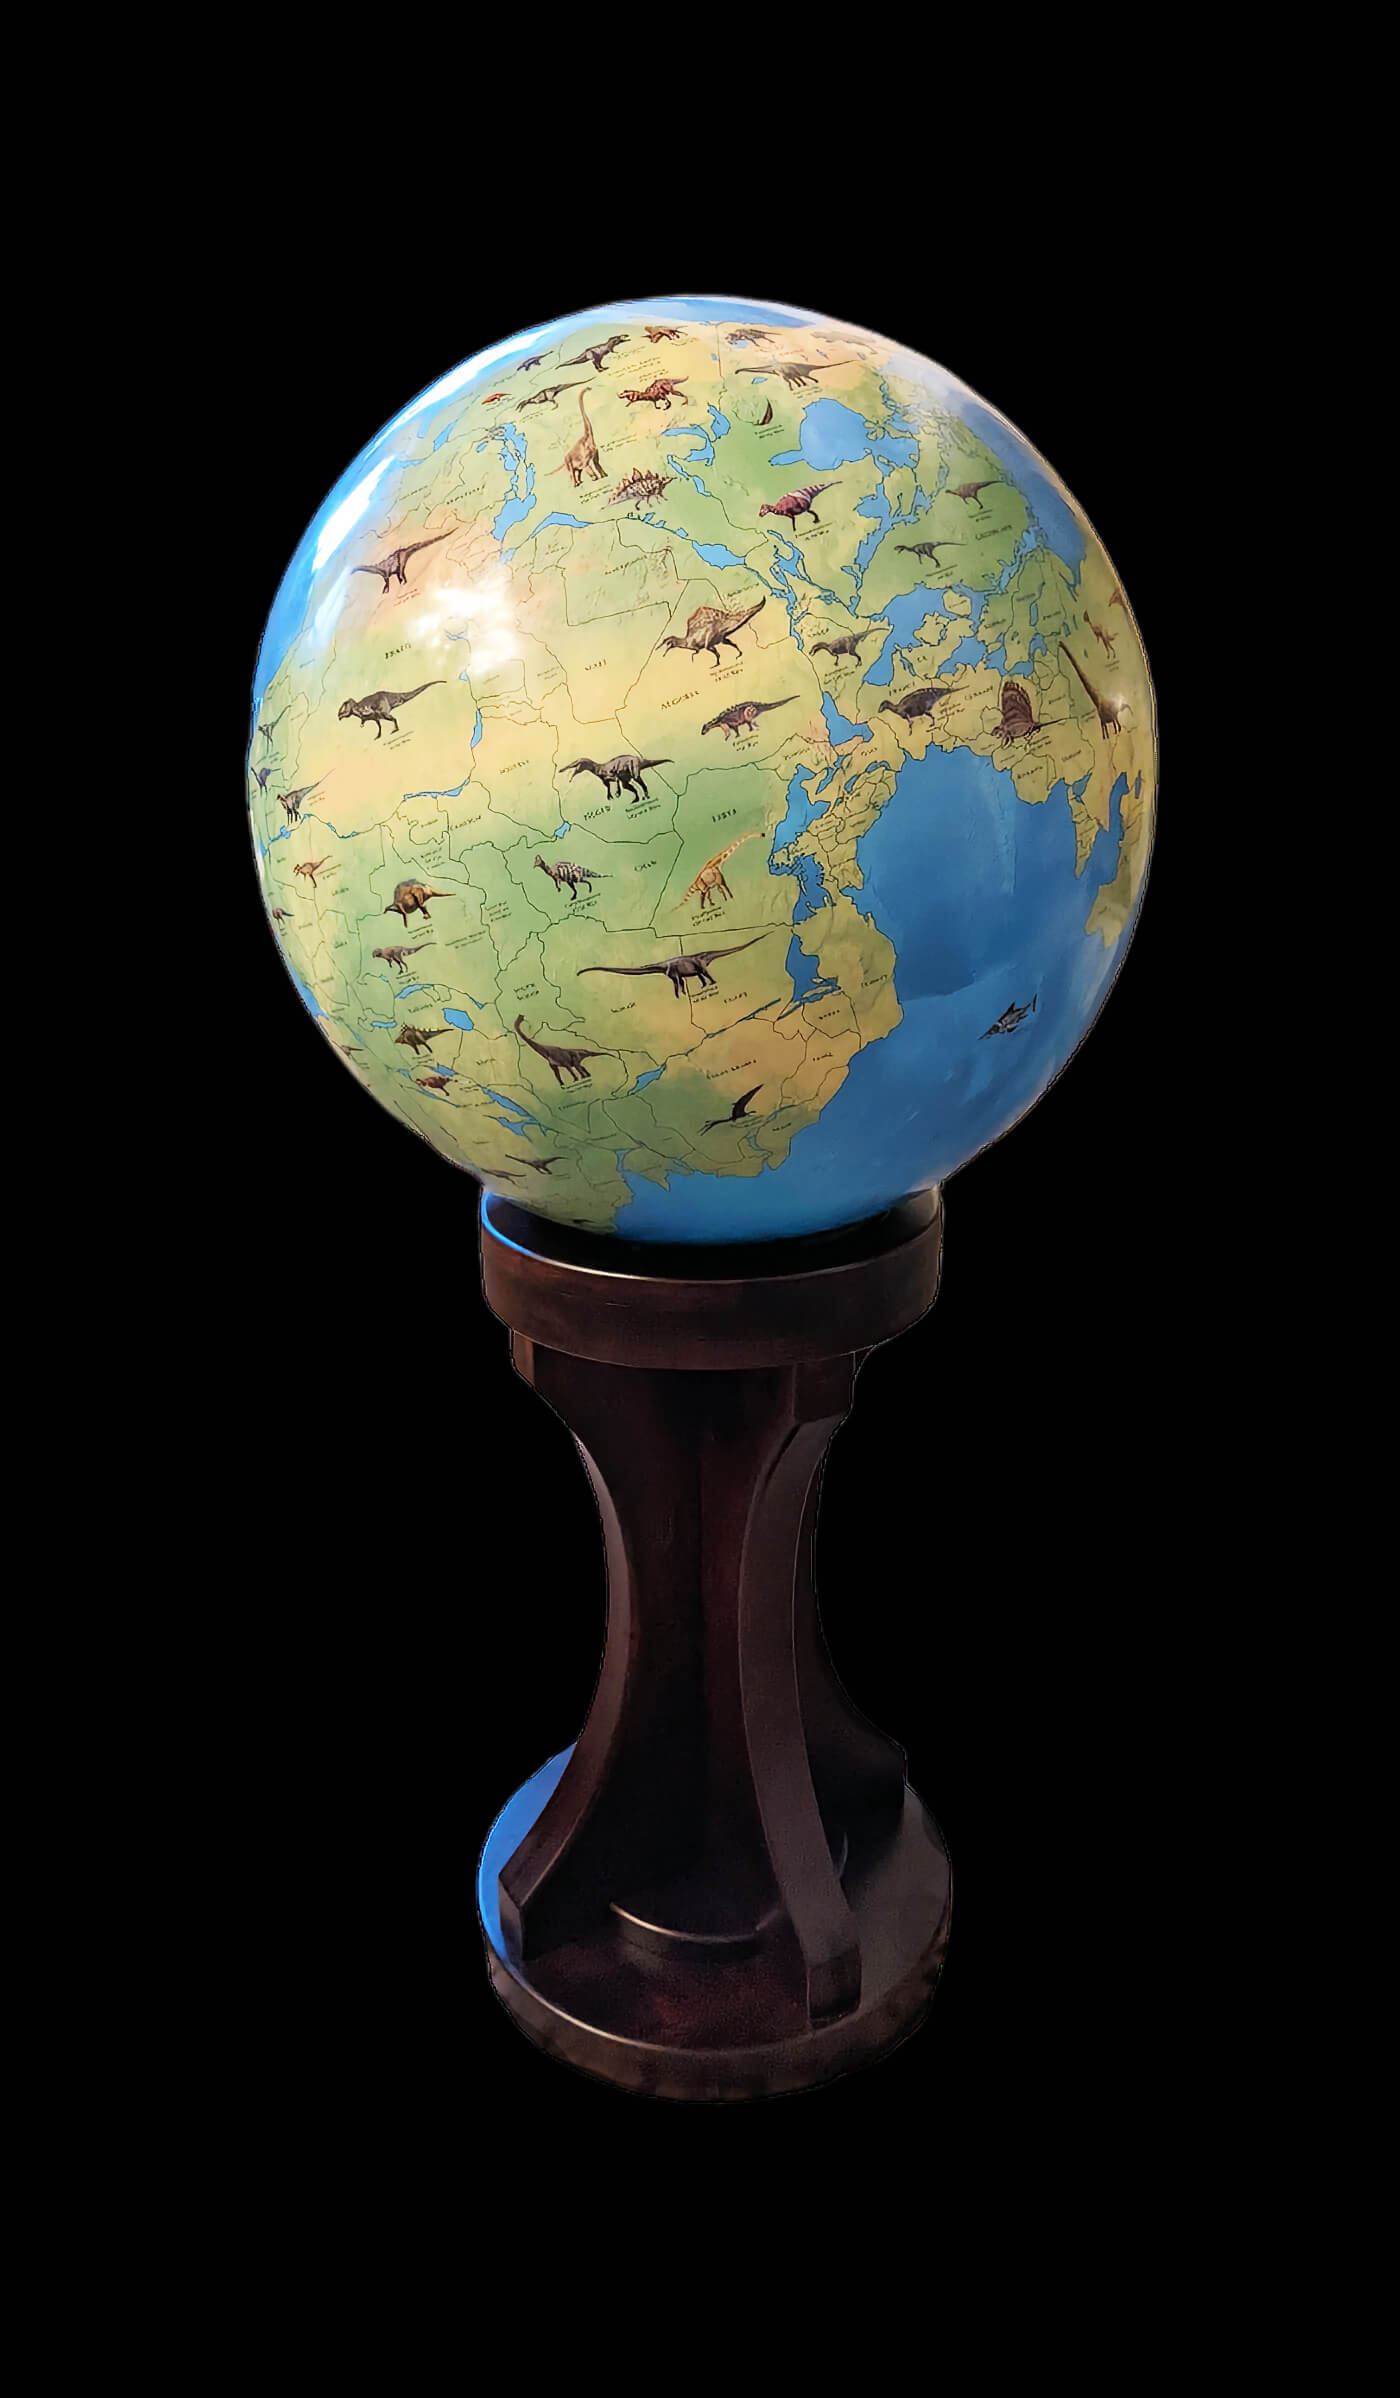 Dinosaur globe Pangea - Earth 200 million years ago - The Blue Planet Globe - Large world globes custom globe